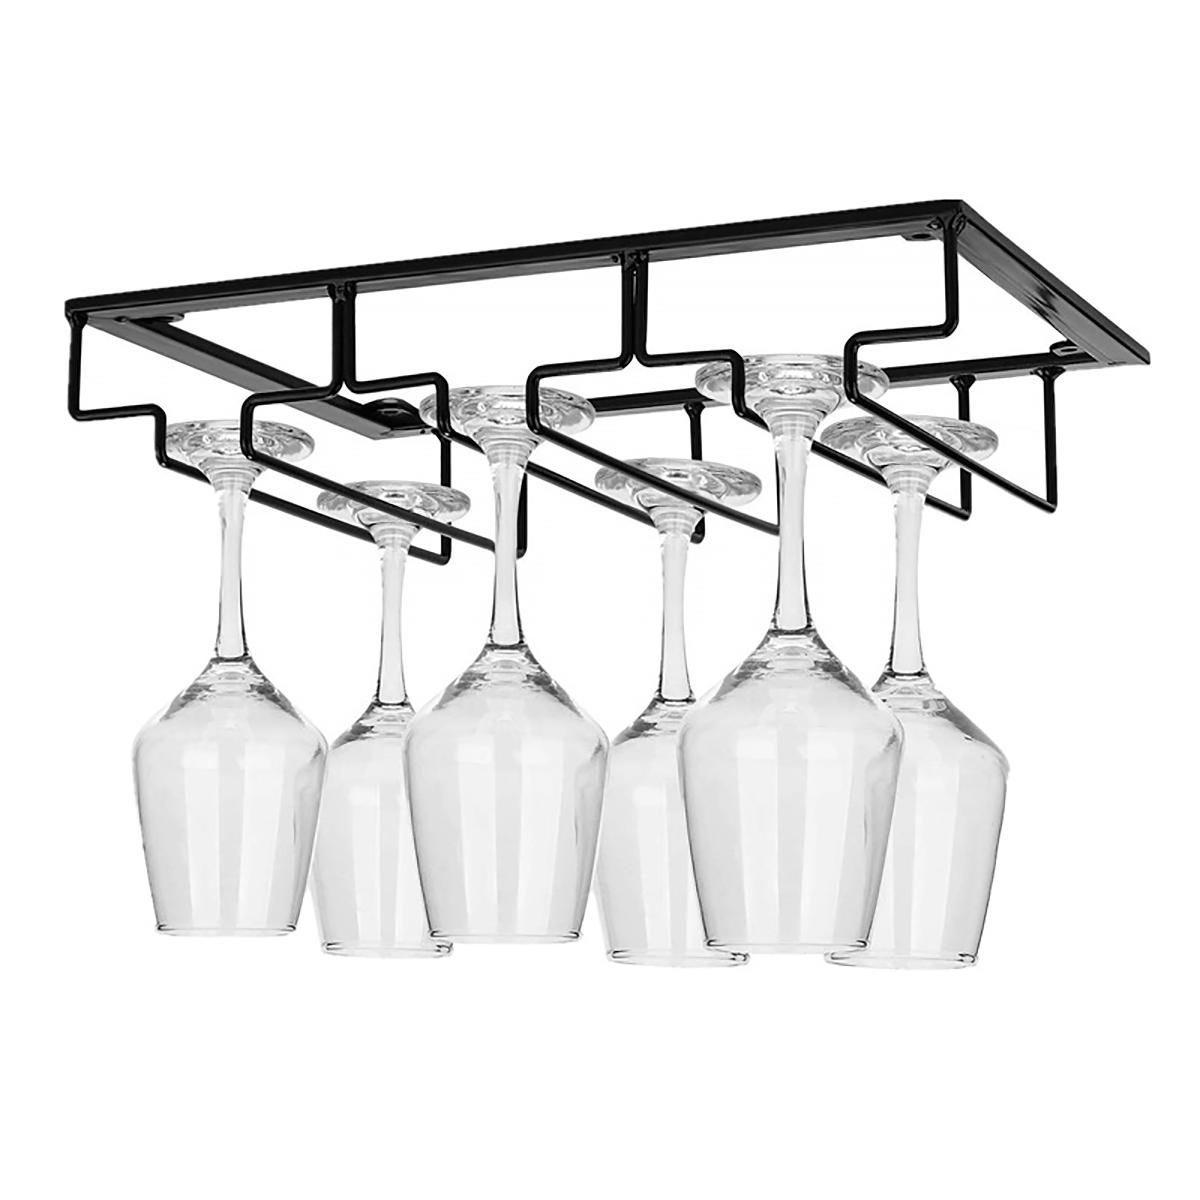 Wall Mount Glass Rack Holder Hanging Under Cabinet Hanger Iron Shelf 4 Type